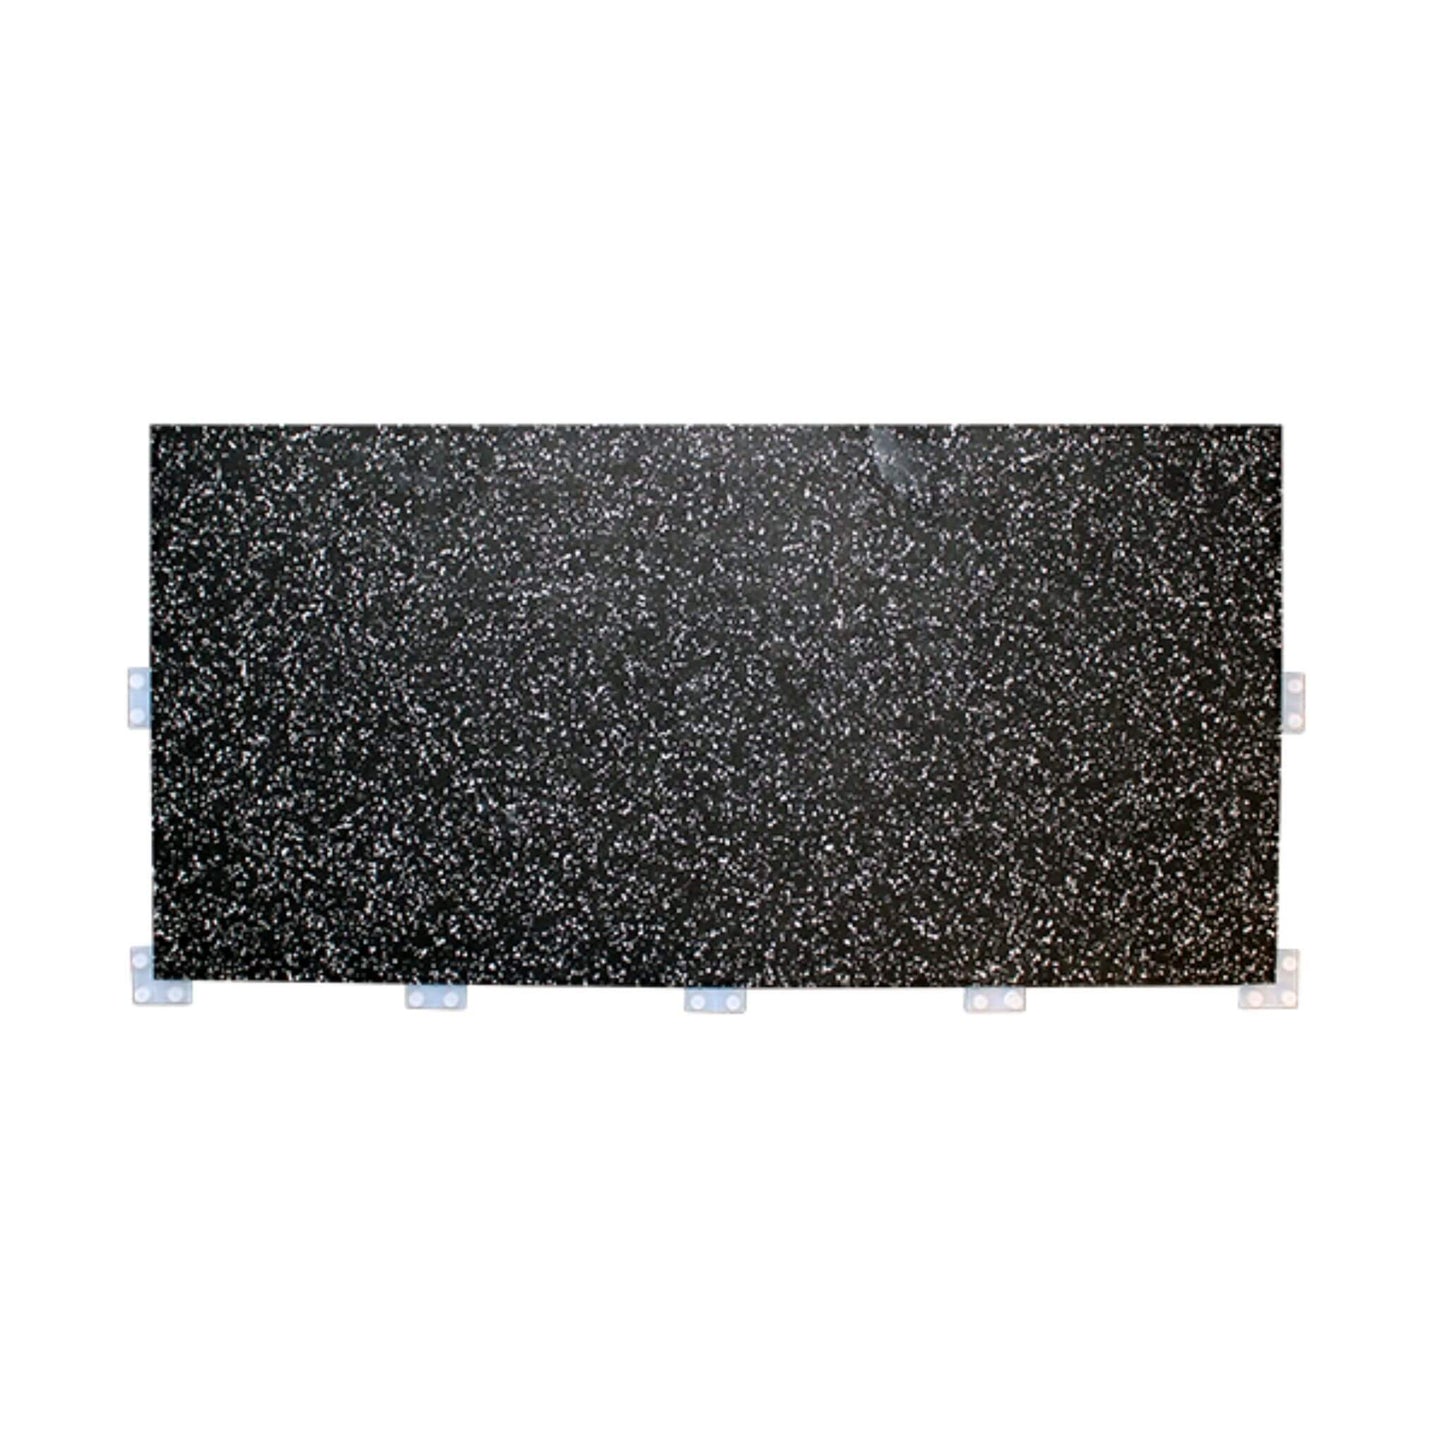 20mm Premium Black Rubber Gym Floor Tile (1m x 0.5m / Grey Fleck) connecting